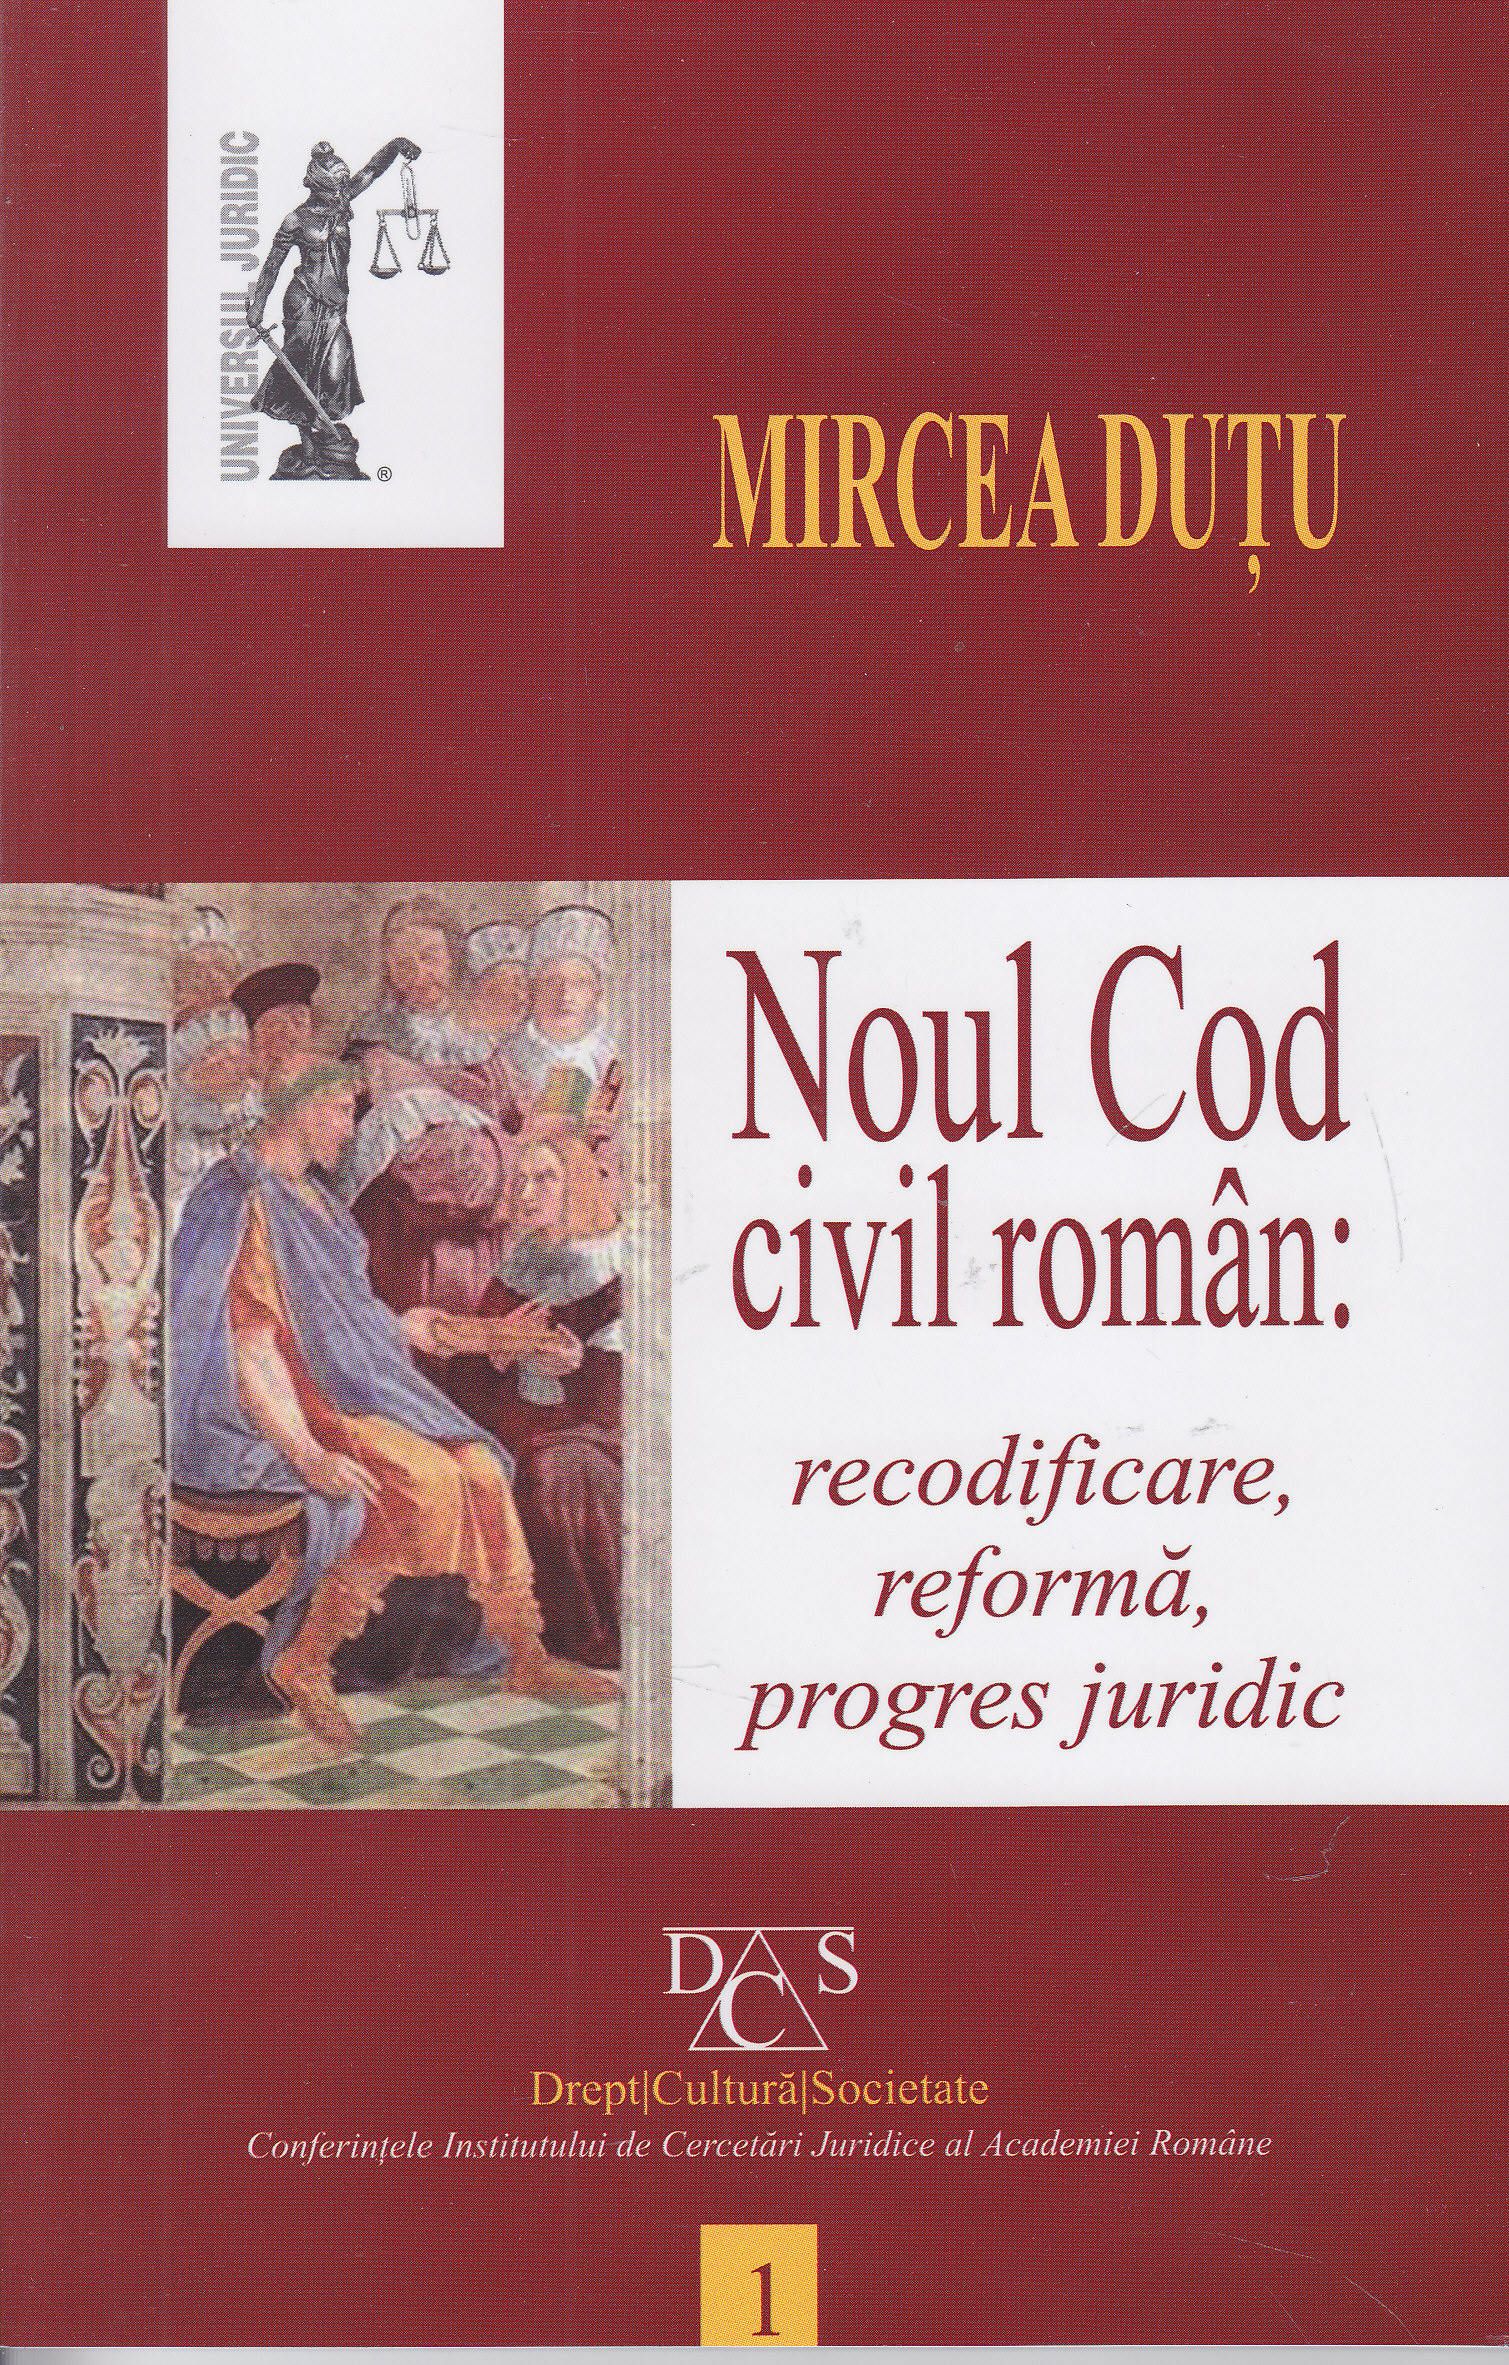 Noul cod civil roman: Recodificare, reforma, progres juridic - Mircea Dutu